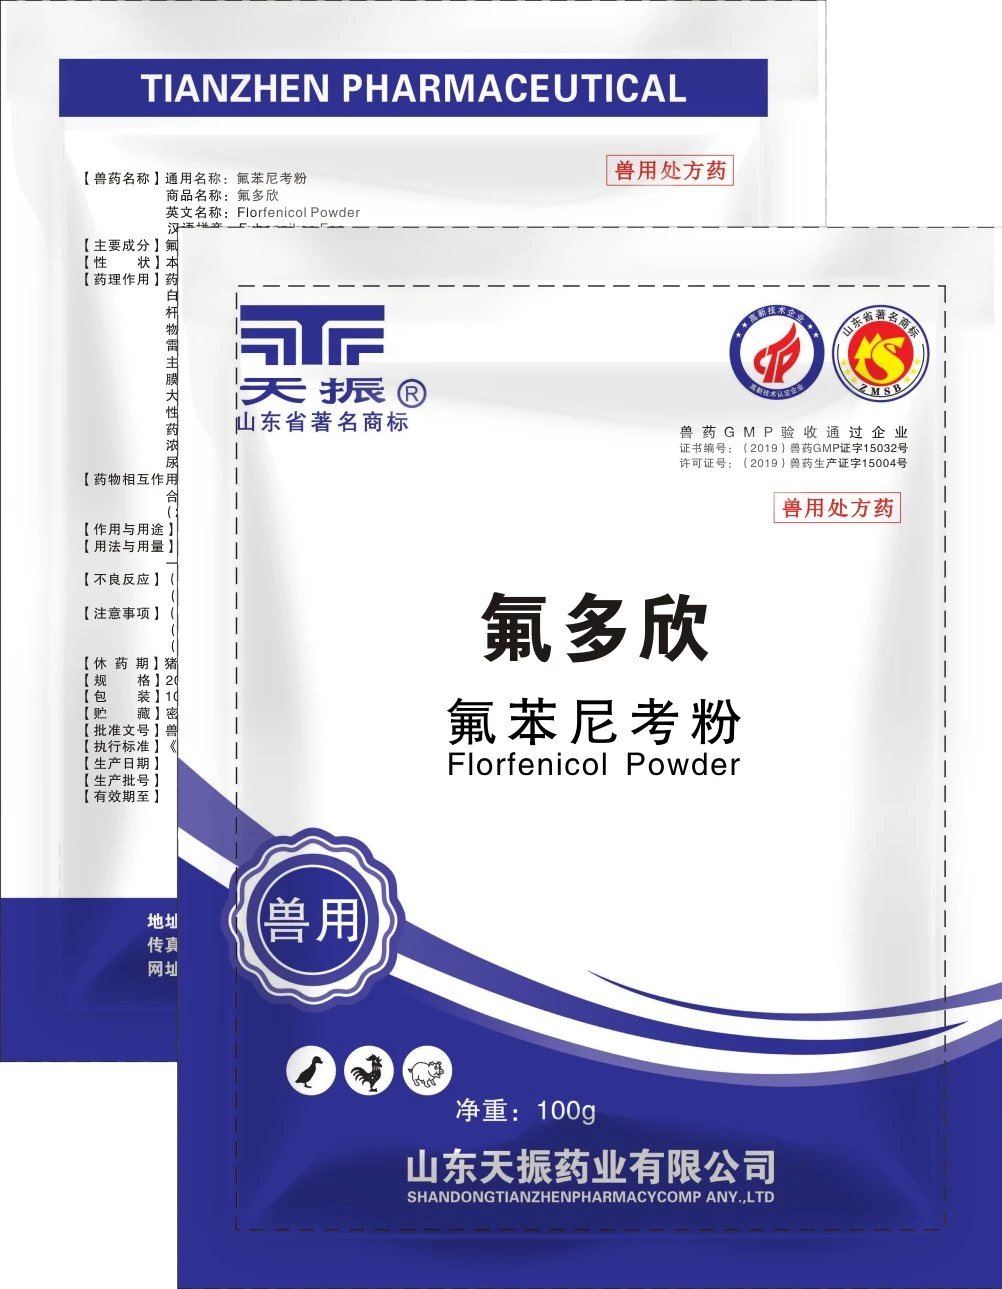 High Pure Florfenicol Powder Veterinary API CAS 73231-34-2 The Wholesale Price/94219-55-3